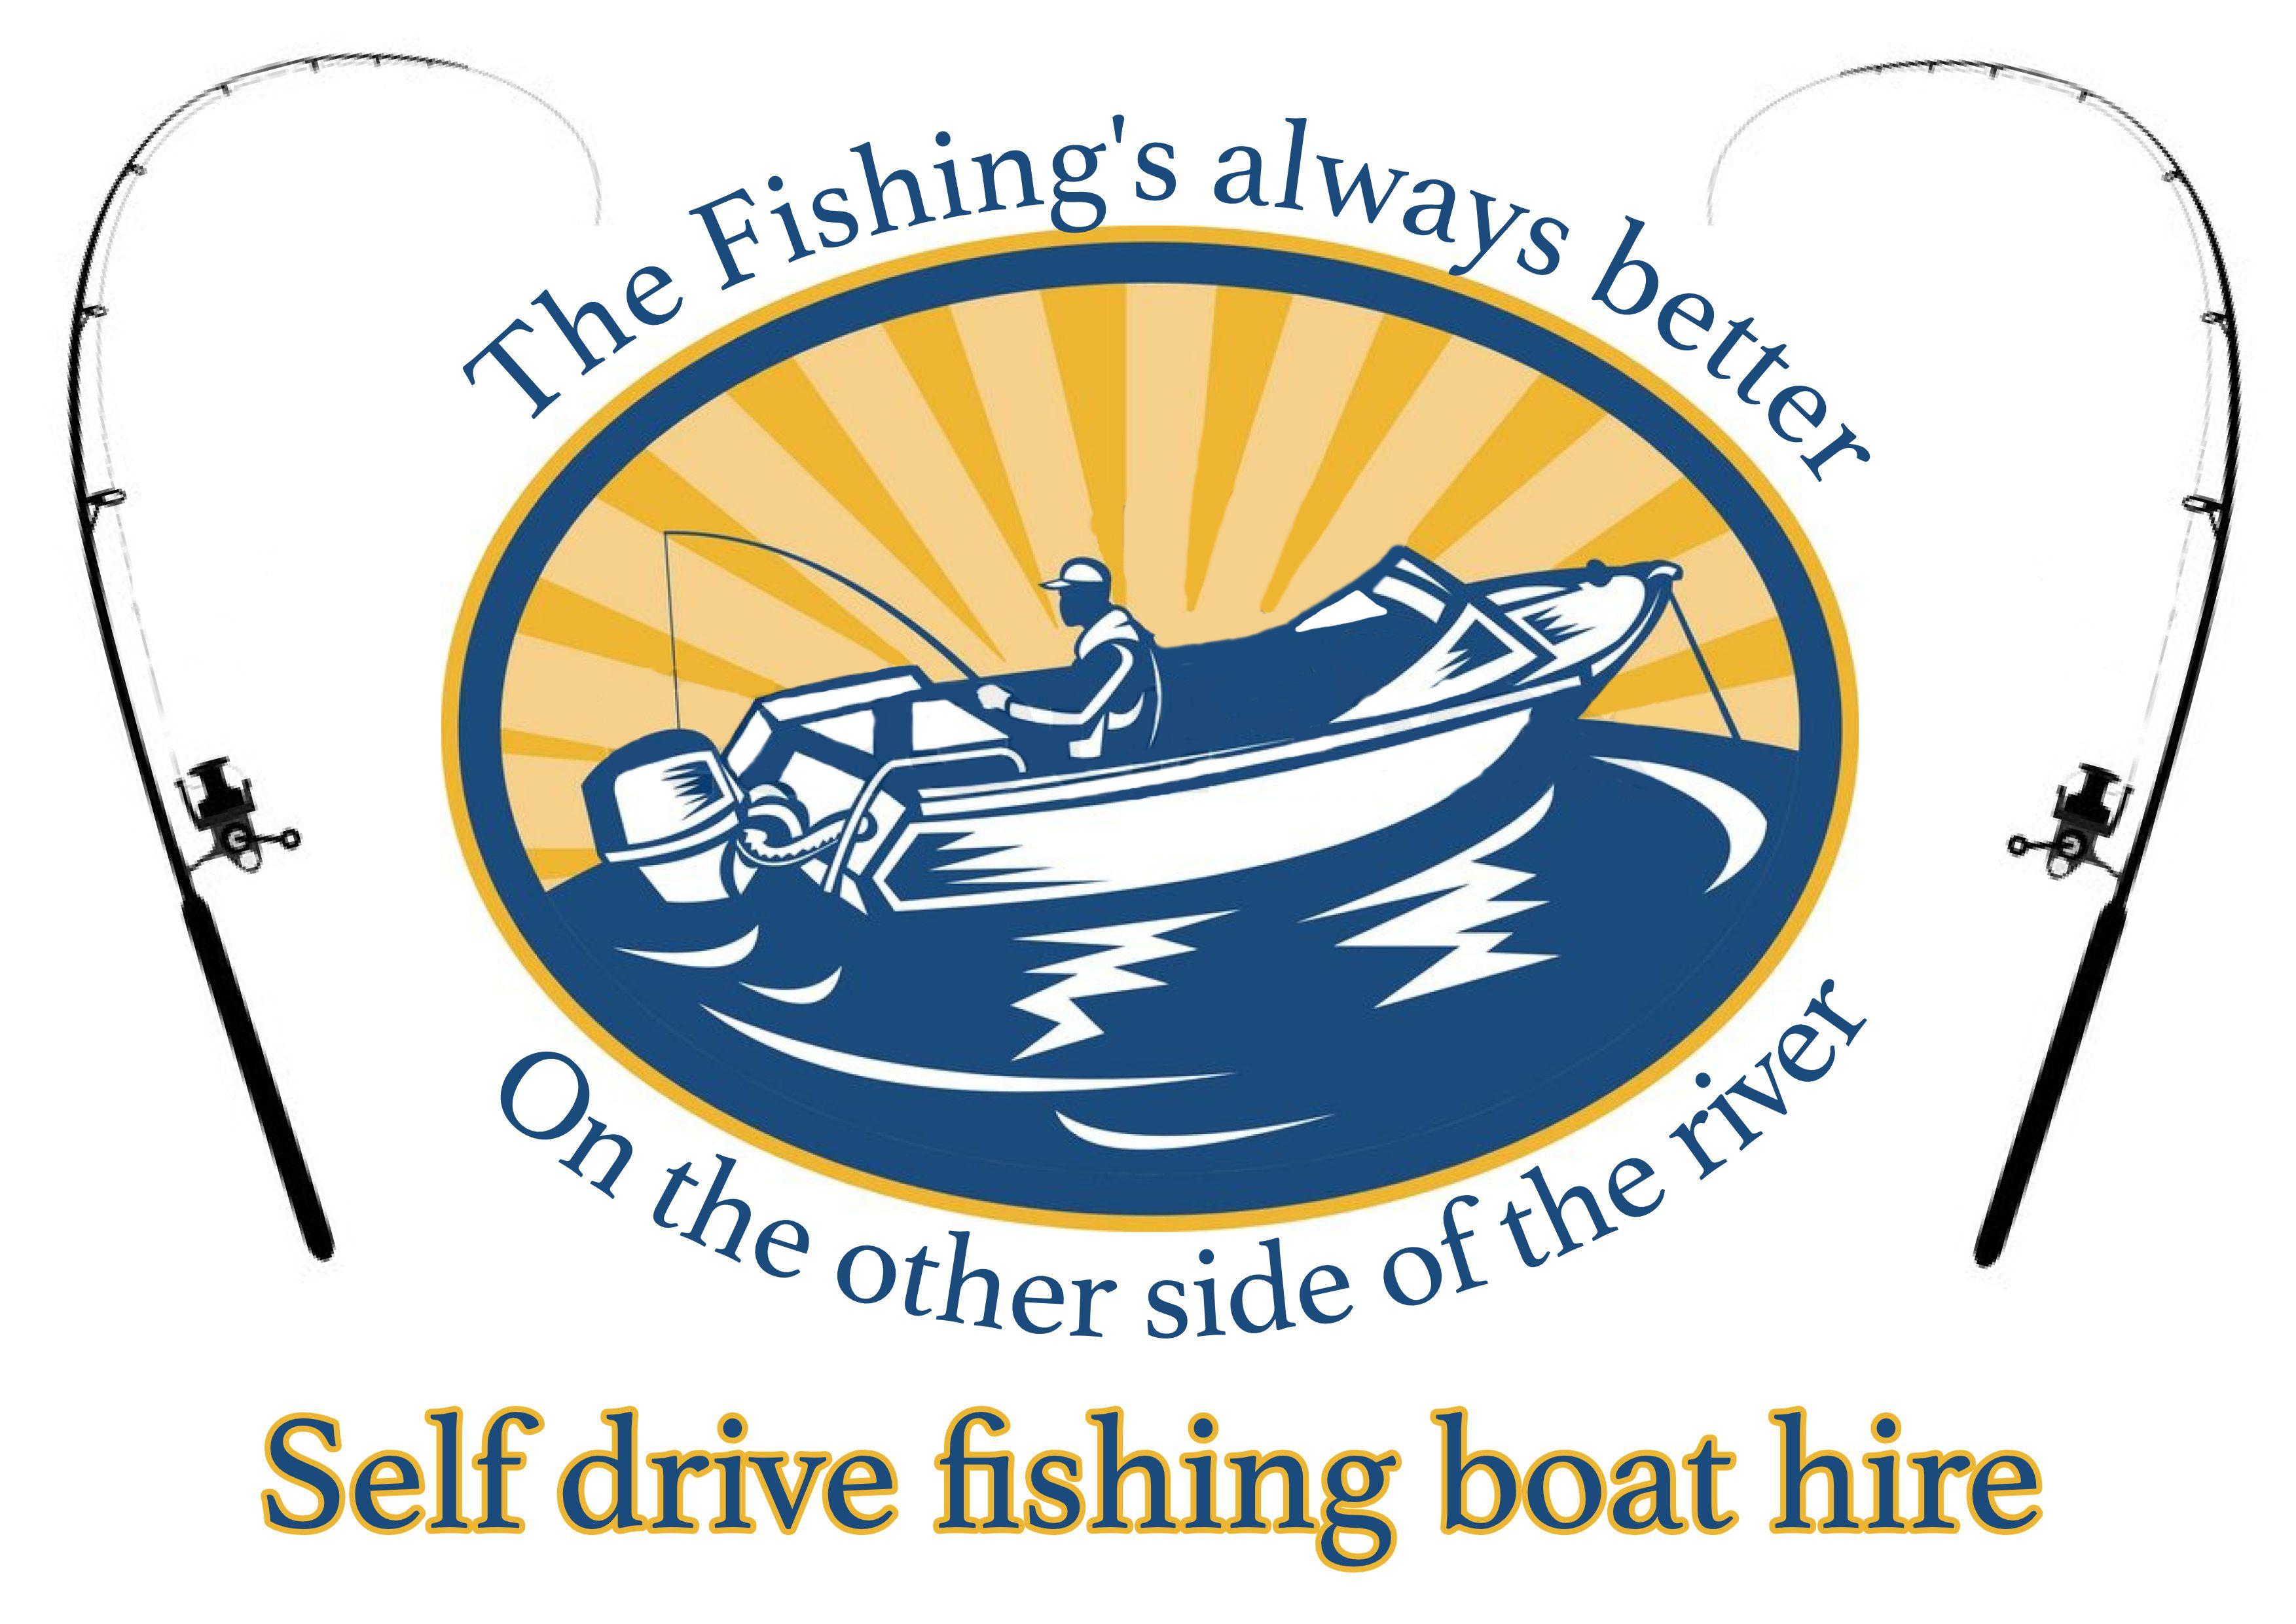 Green Boat Logo - Fishing boats